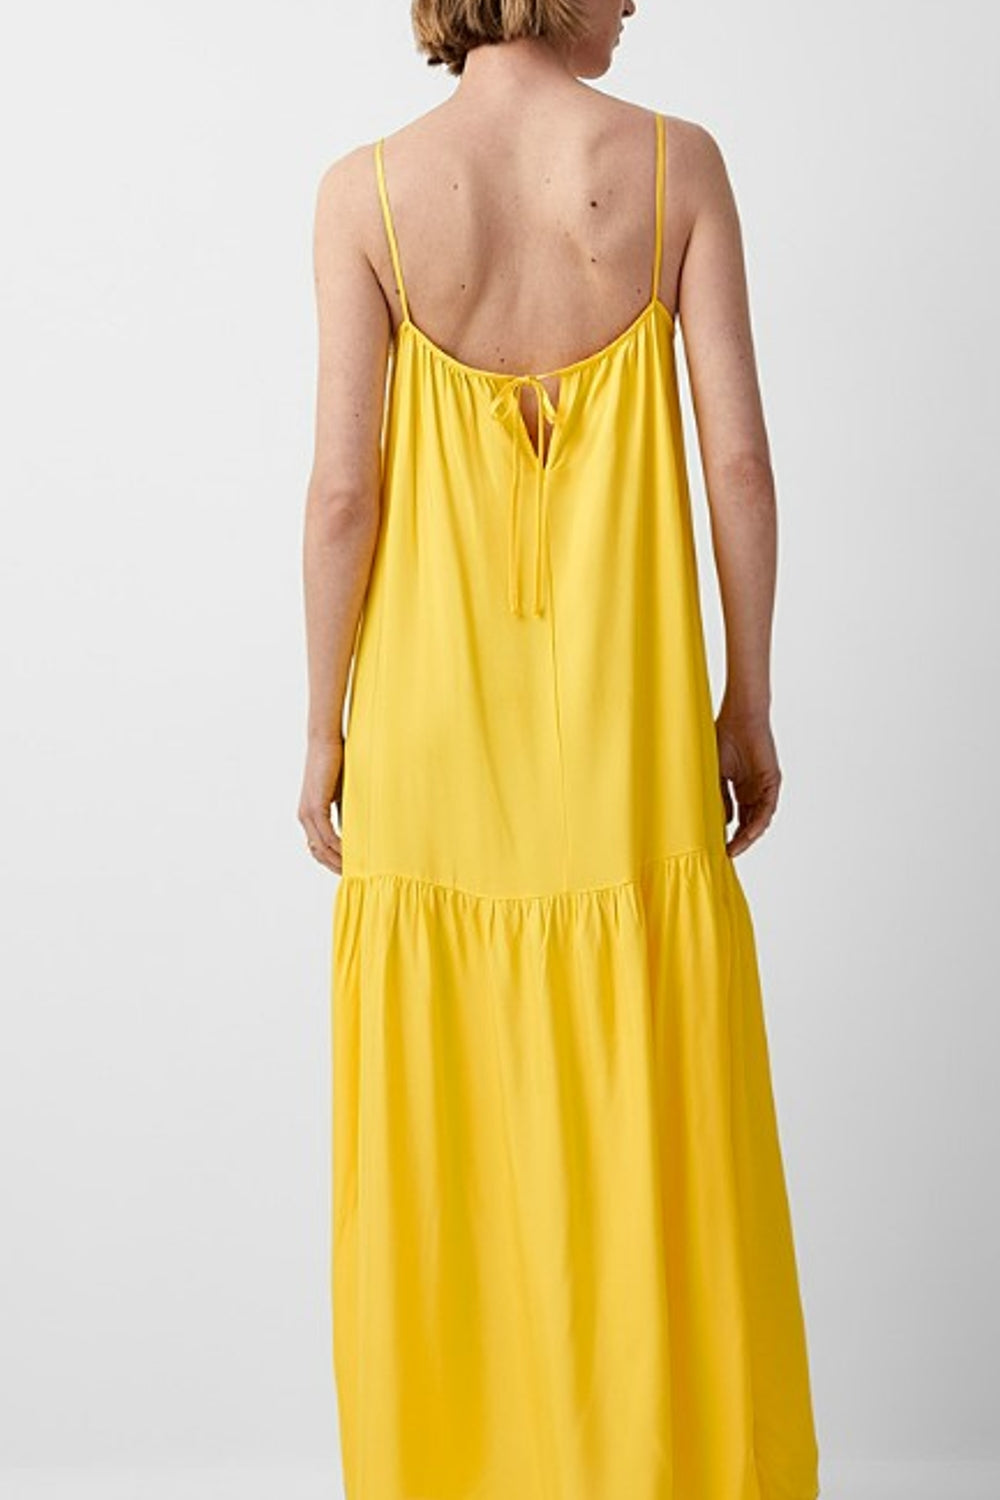 Enchanting Yellow Dress